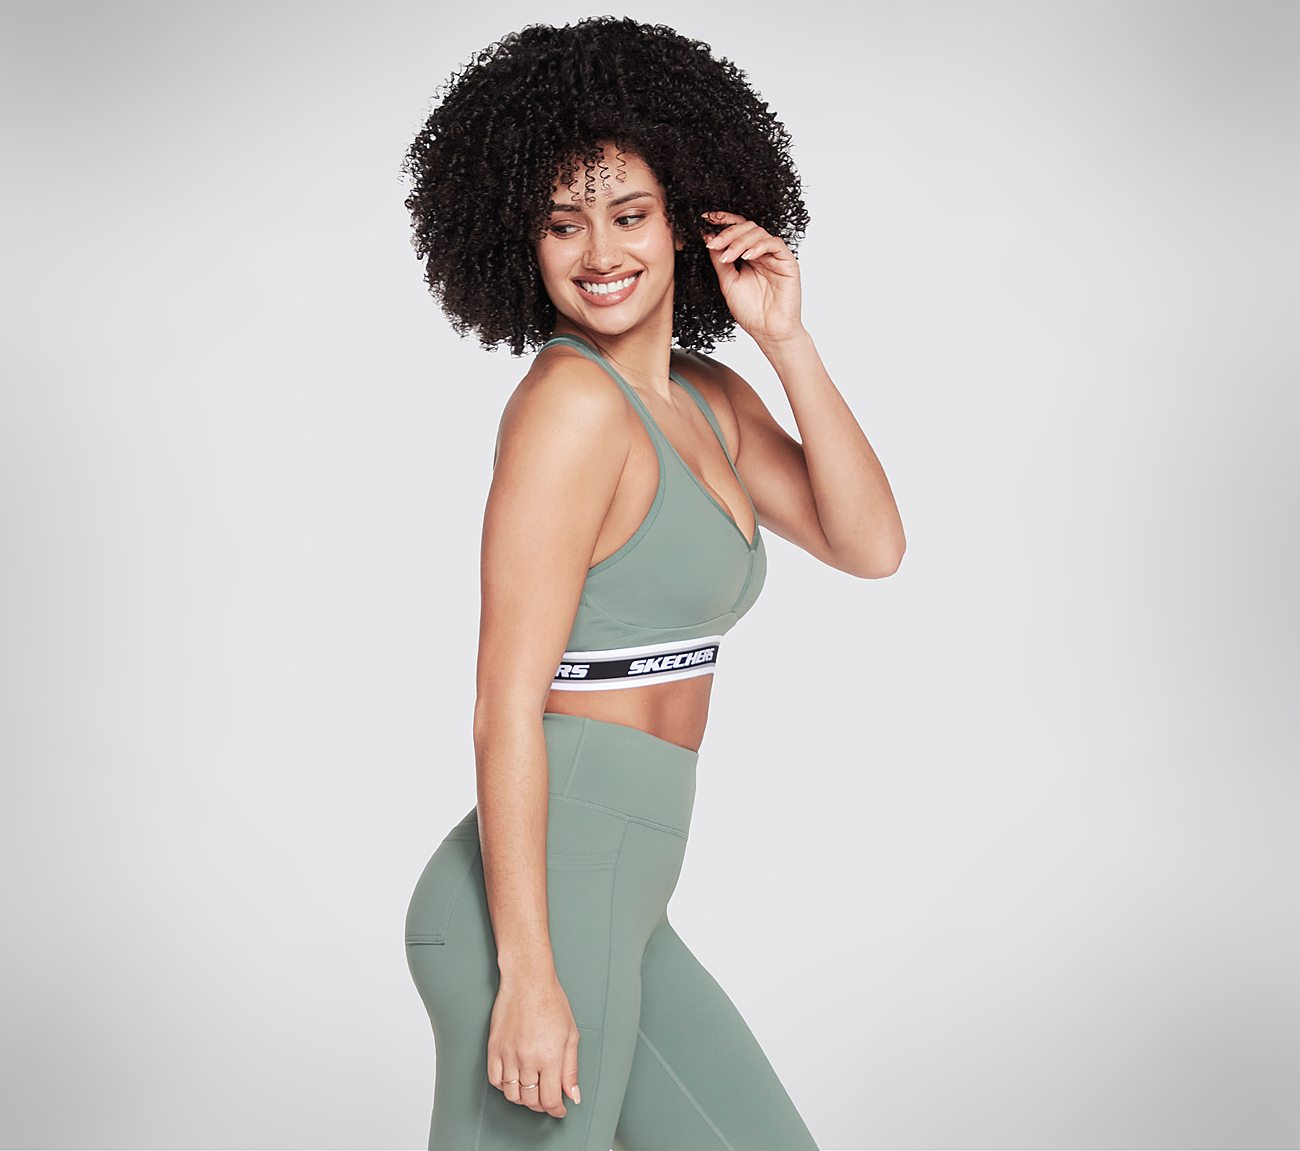 Jacquard Foam Cloth Sportswear Woman 2 Piece Yoga Gym Sets Women